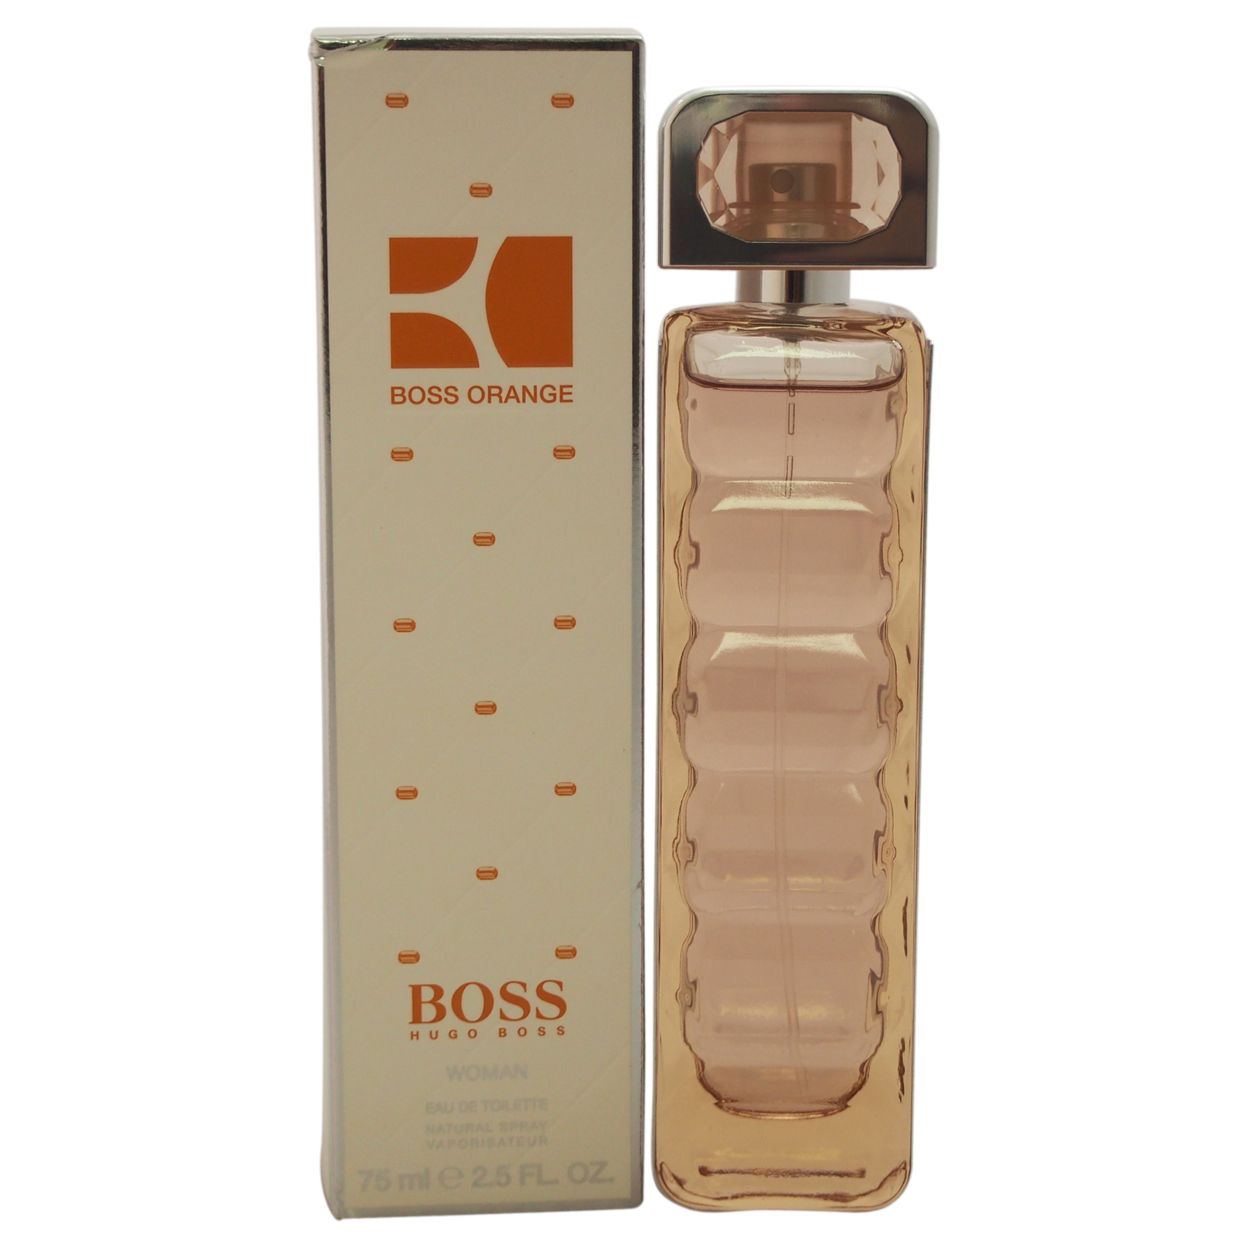 HUGO BOSS Boss Orange Eau de Toilette, Perfume for Women, 2.5 Oz - image 1 of 3